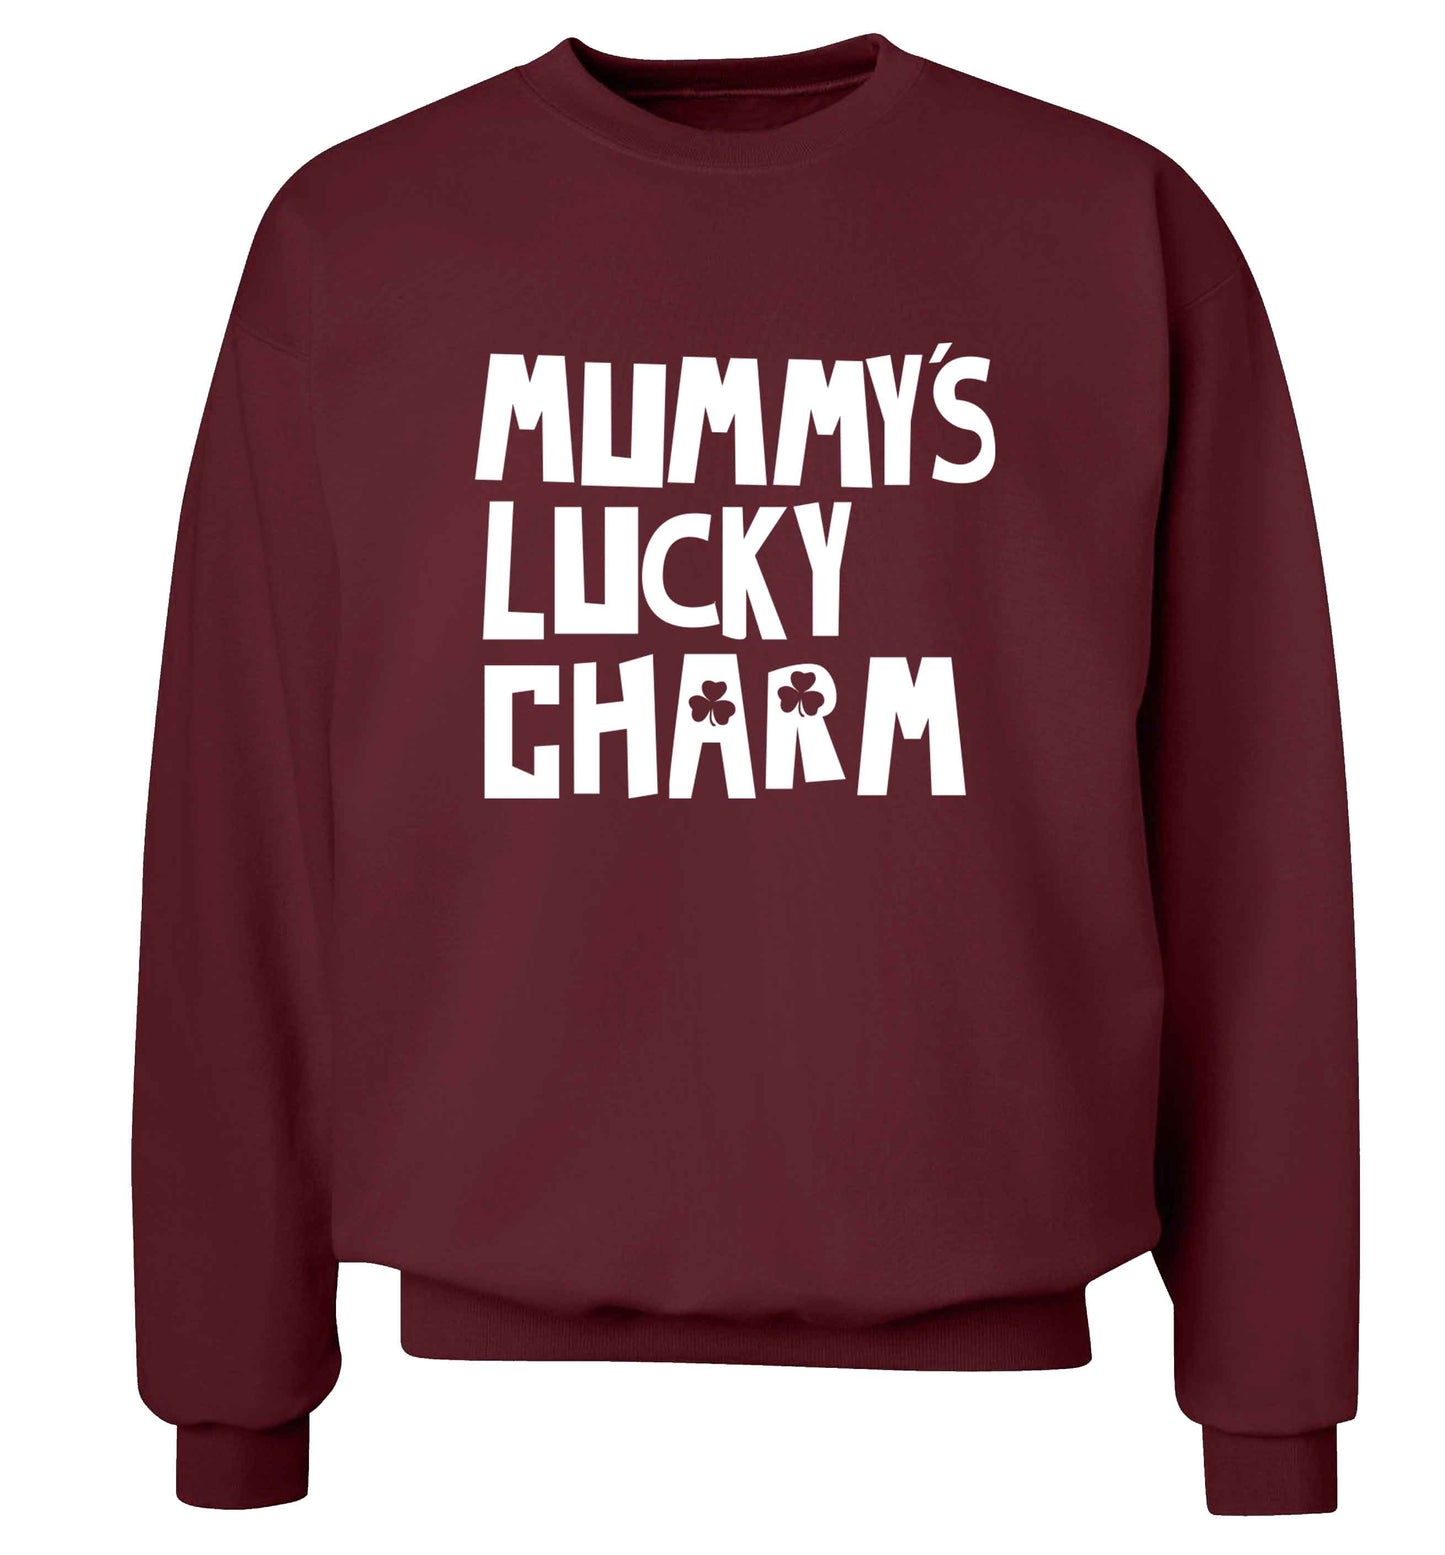 Mummy's lucky charm adult's unisex maroon sweater 2XL